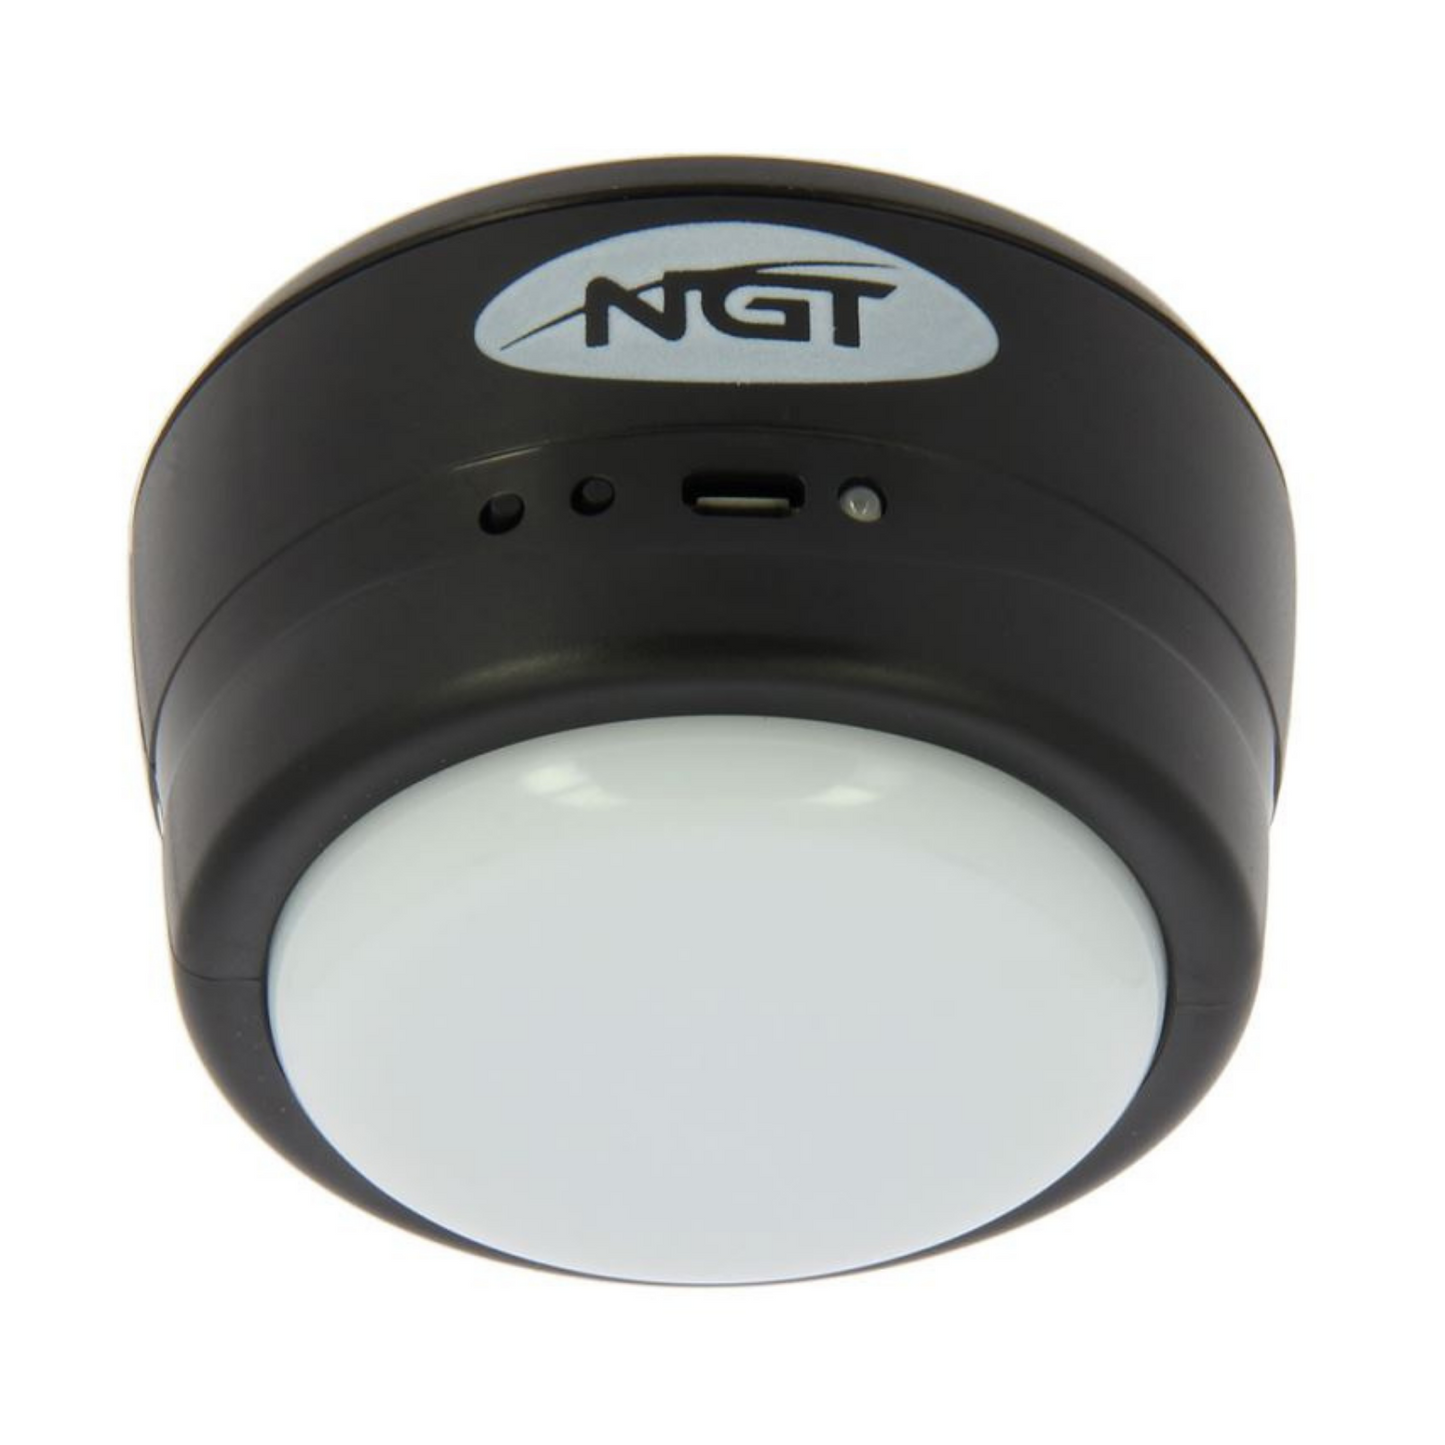 NGT VS Light System - Bivvy Light For use with all VS Wireless Alarm Sets